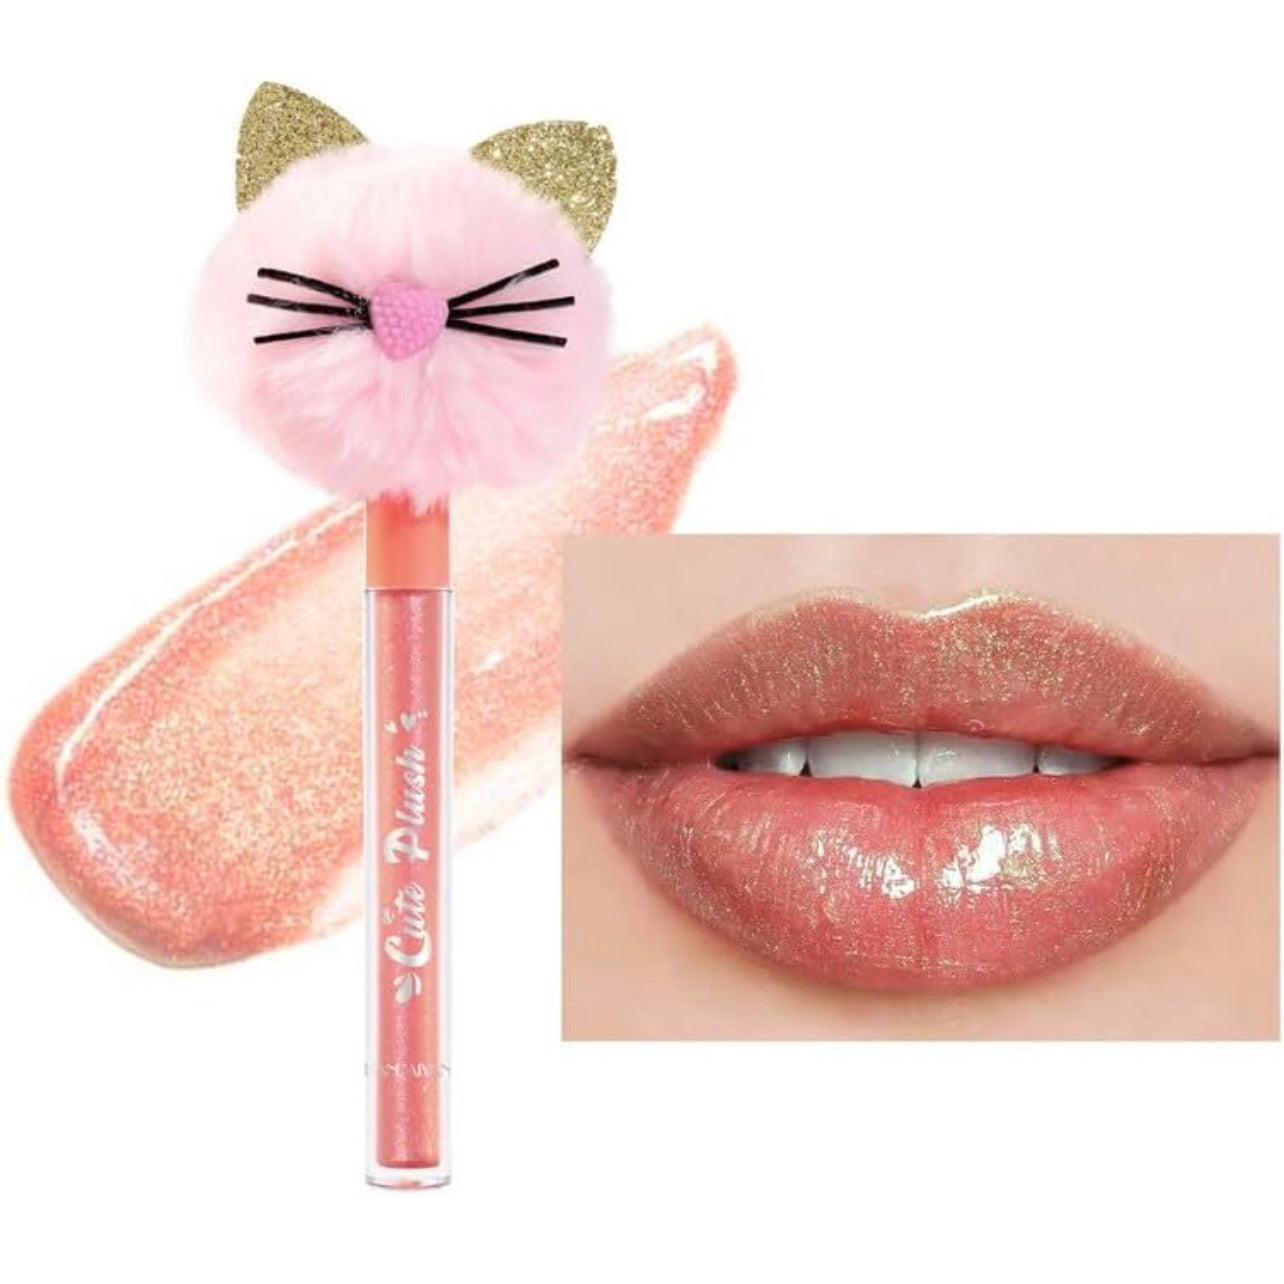 Plush Kitty Diamond Lip Plumping Lip Topper | Plump Lips Naturally| 4 Pastel Colors